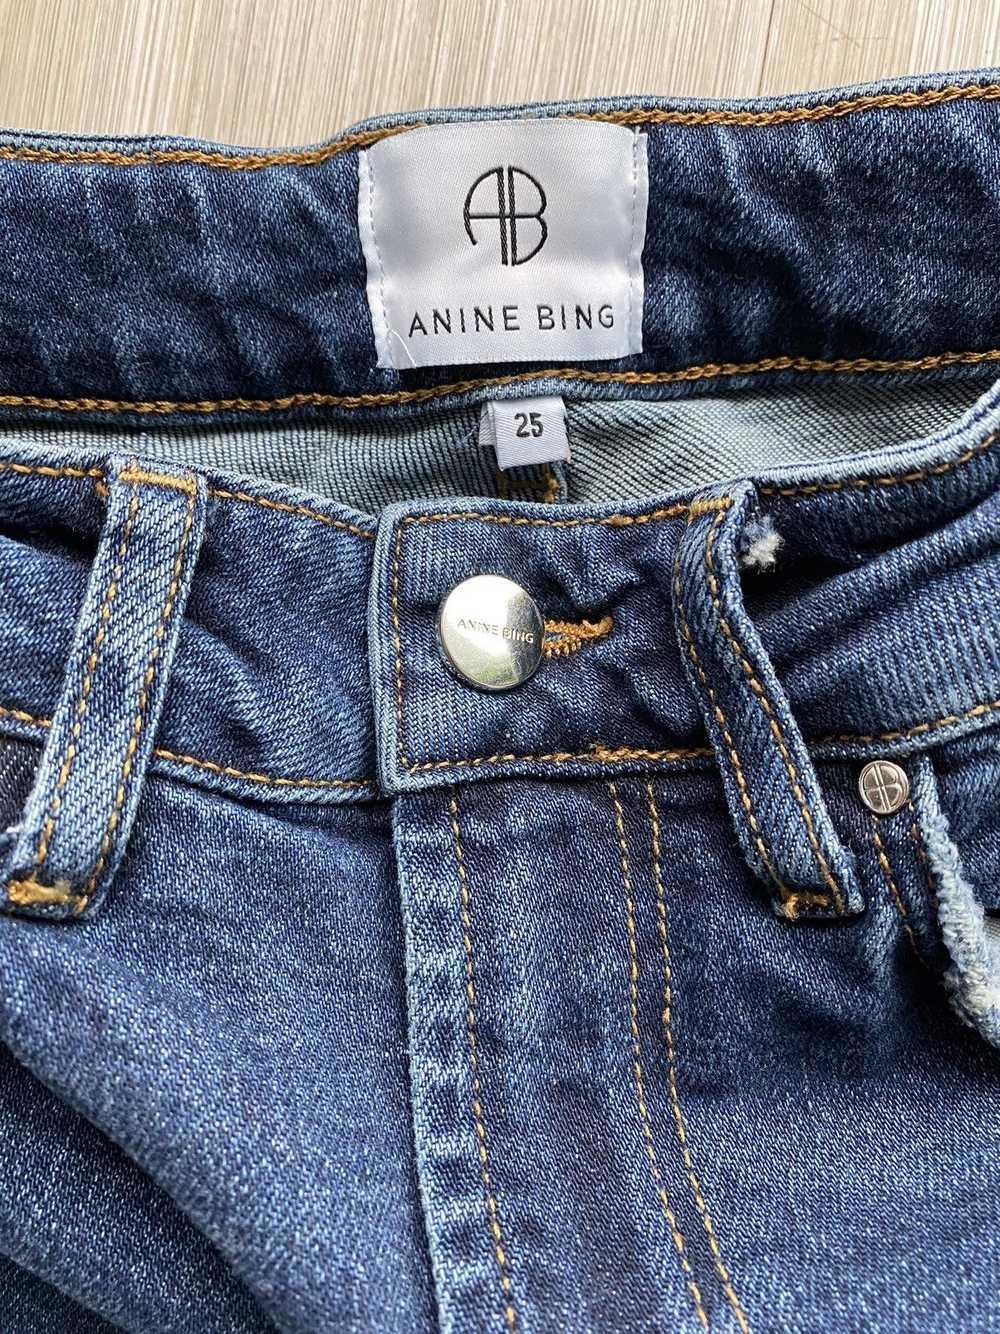 Anine Bing Anine Bing Jagger jeans 25 - image 4